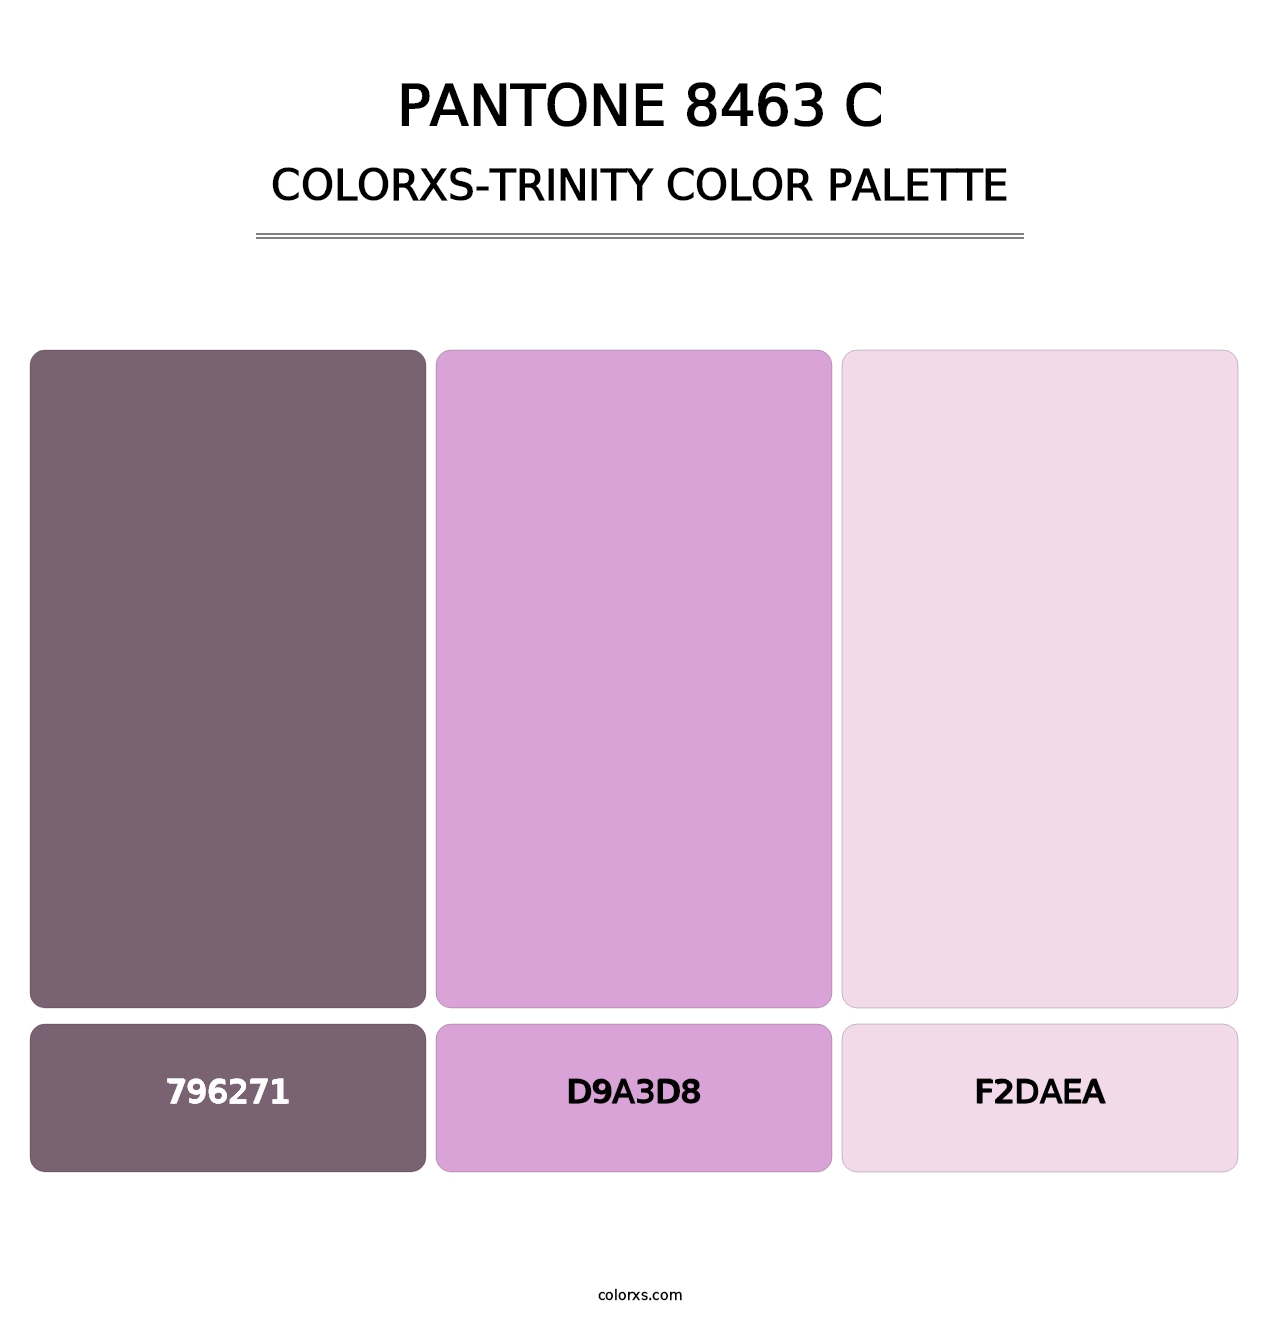 PANTONE 8463 C - Colorxs Trinity Palette